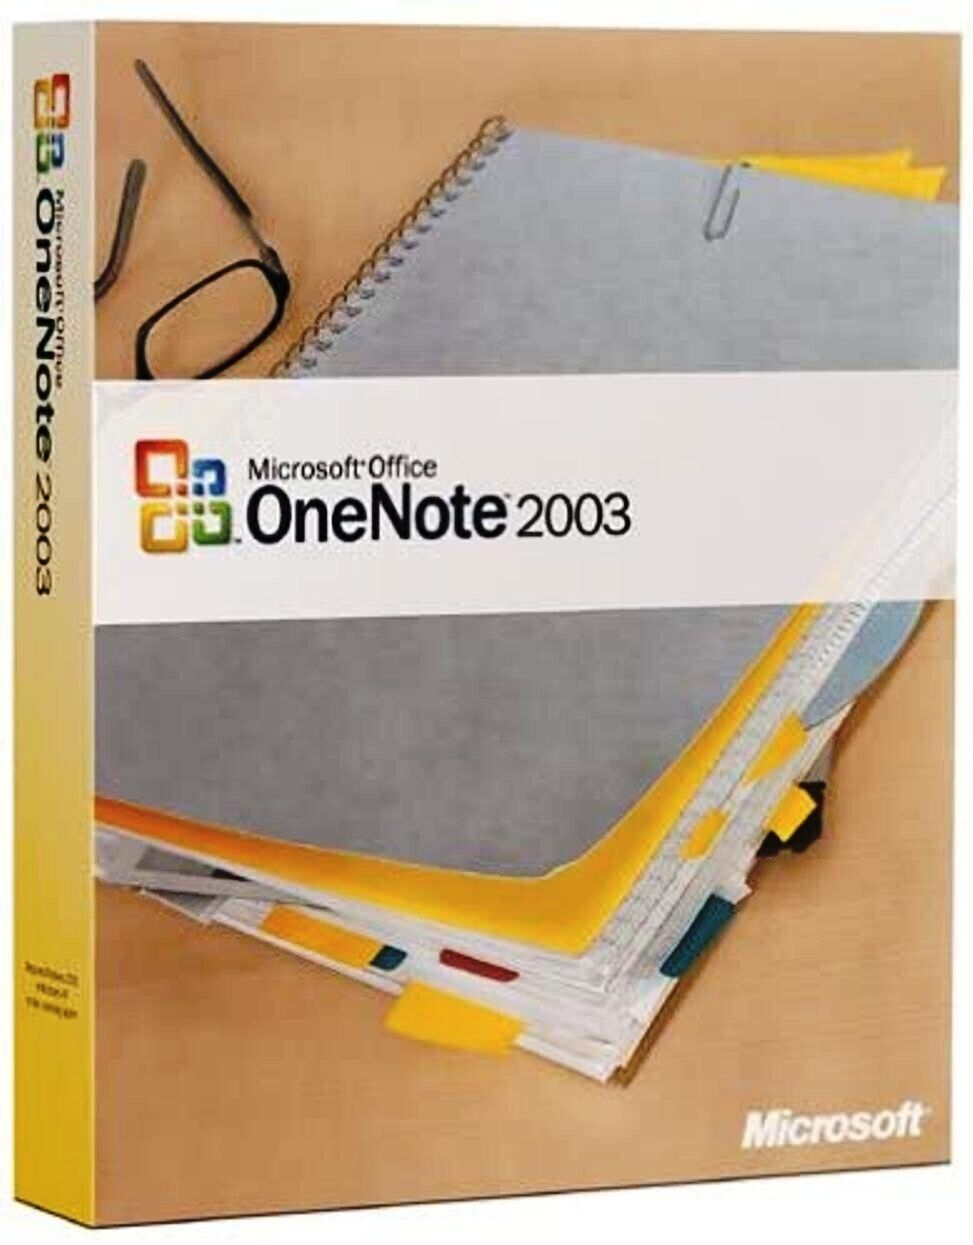 Microsoft Office OneNote 2003 Full Version w/ License = NEW =